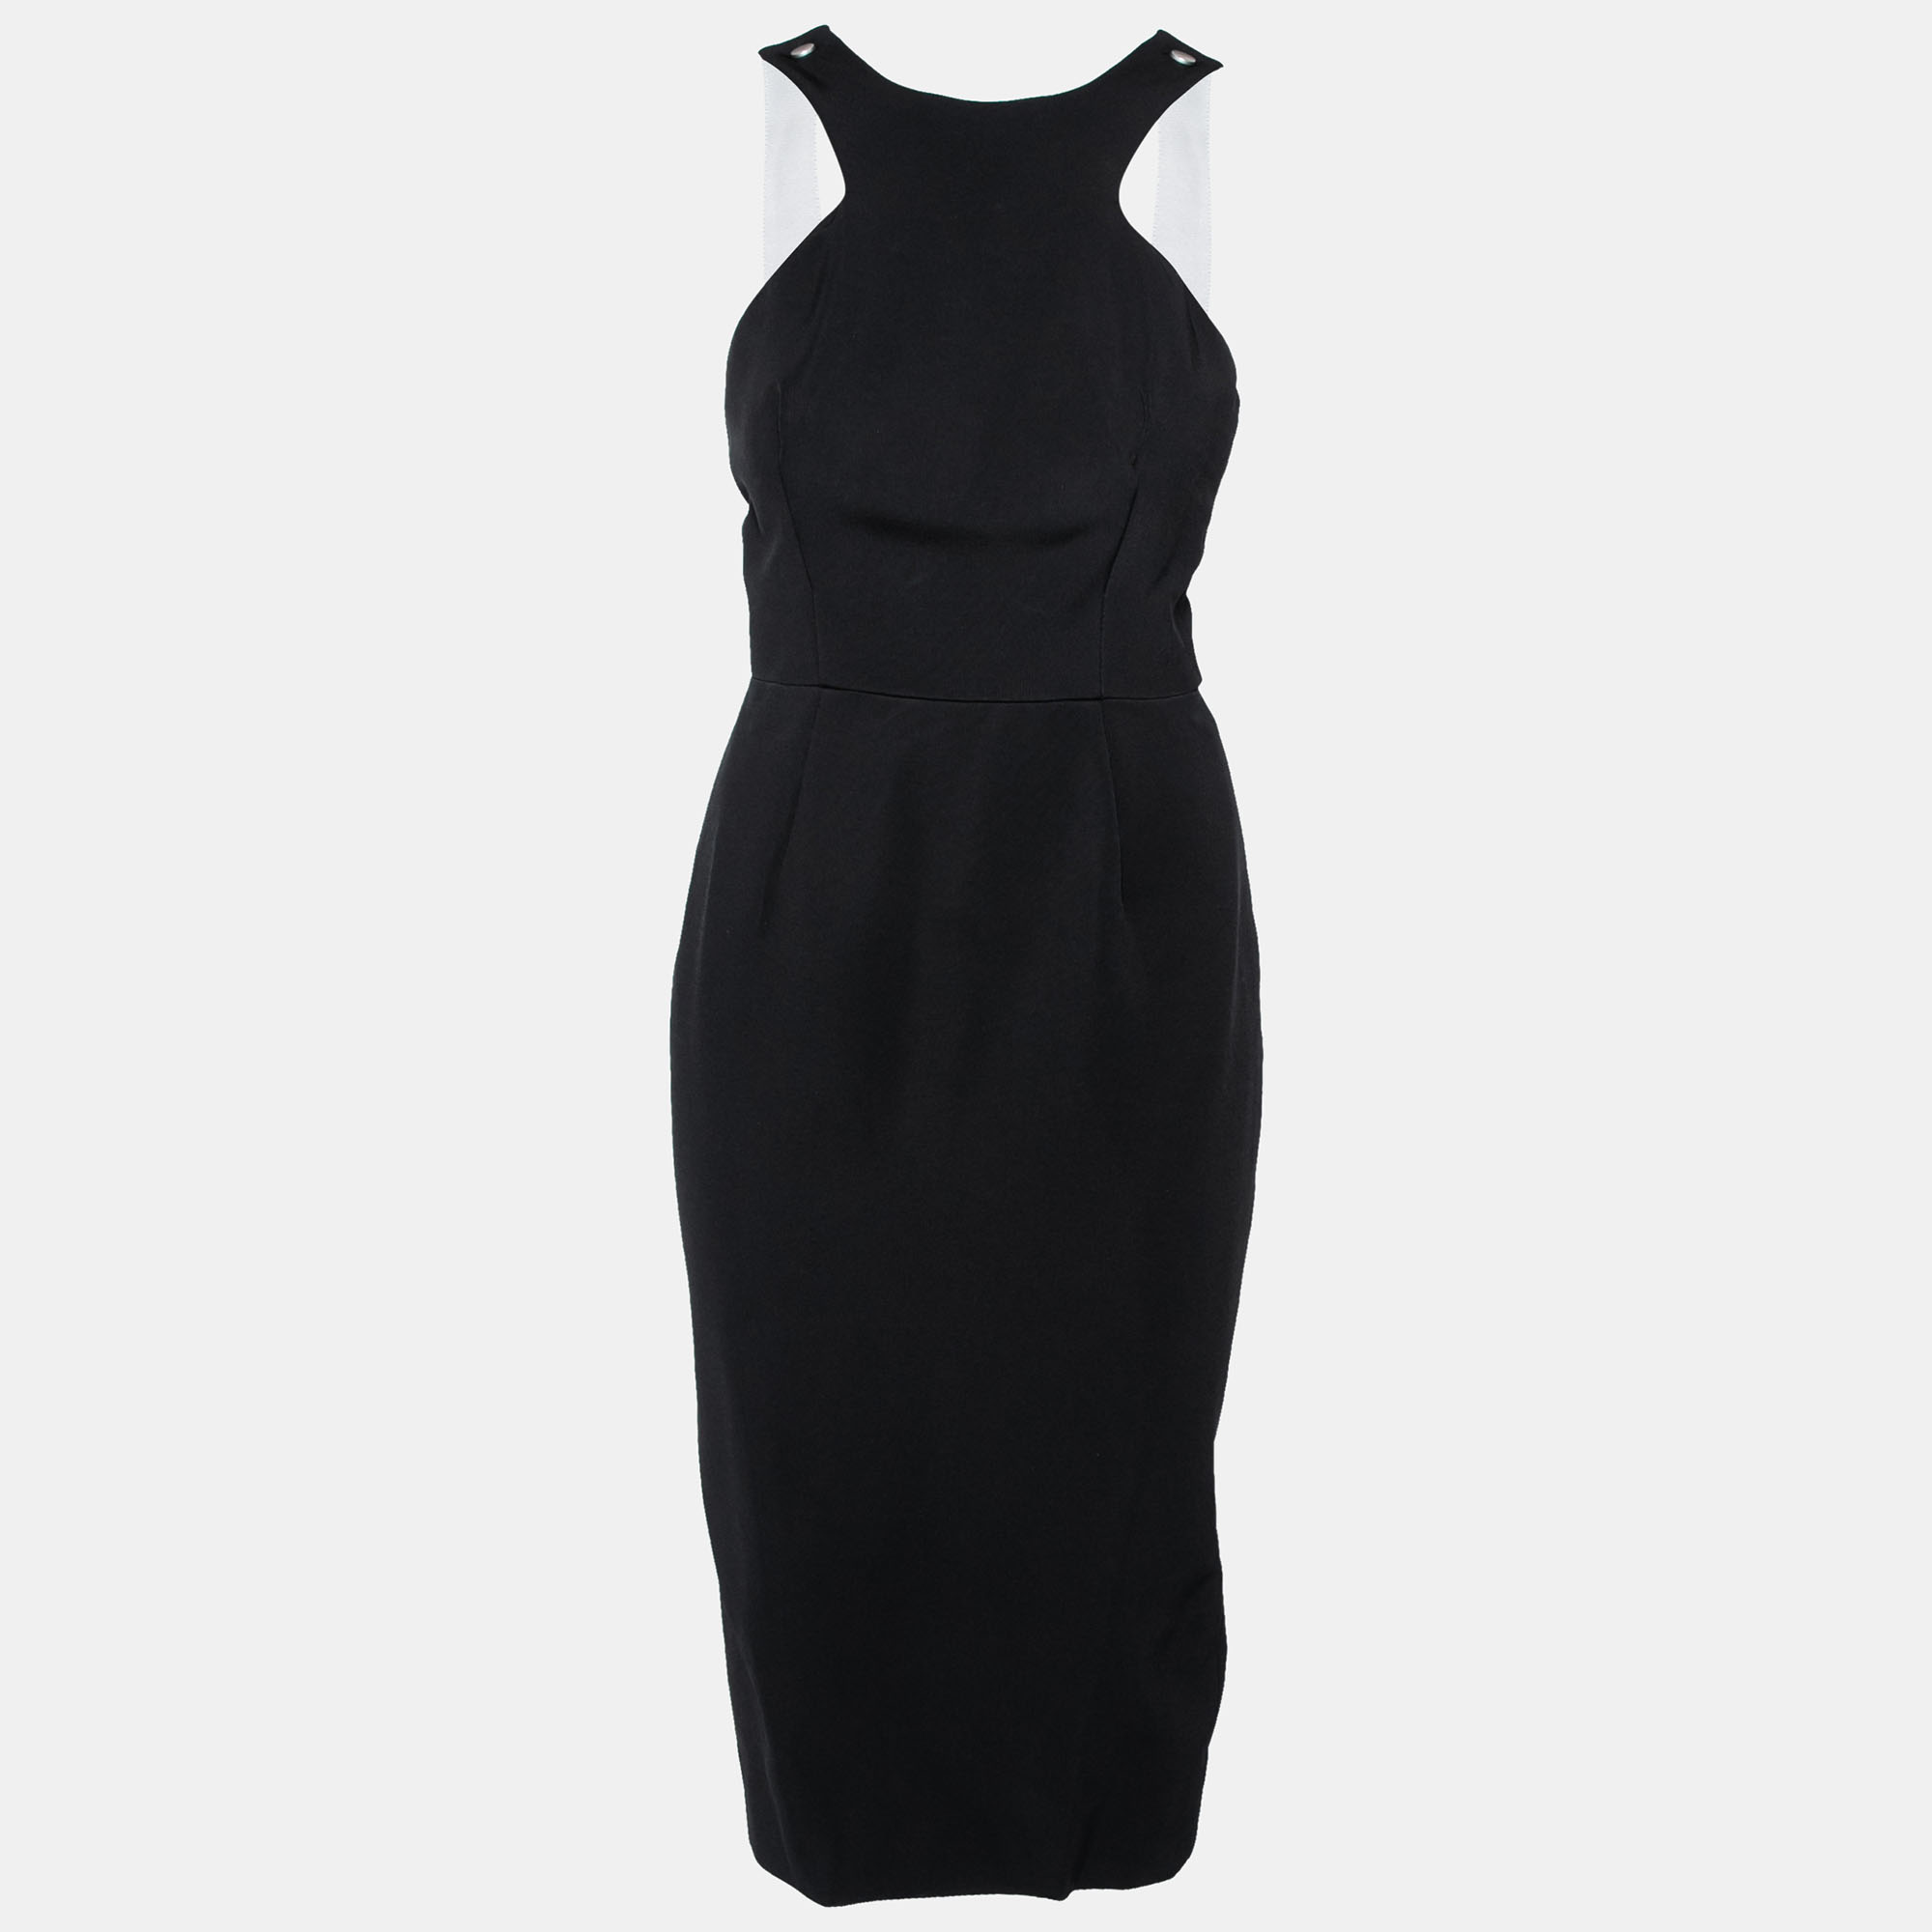 

Victoria Beckham Black Crepe Contrast Strap Detail Sleeveless Dress